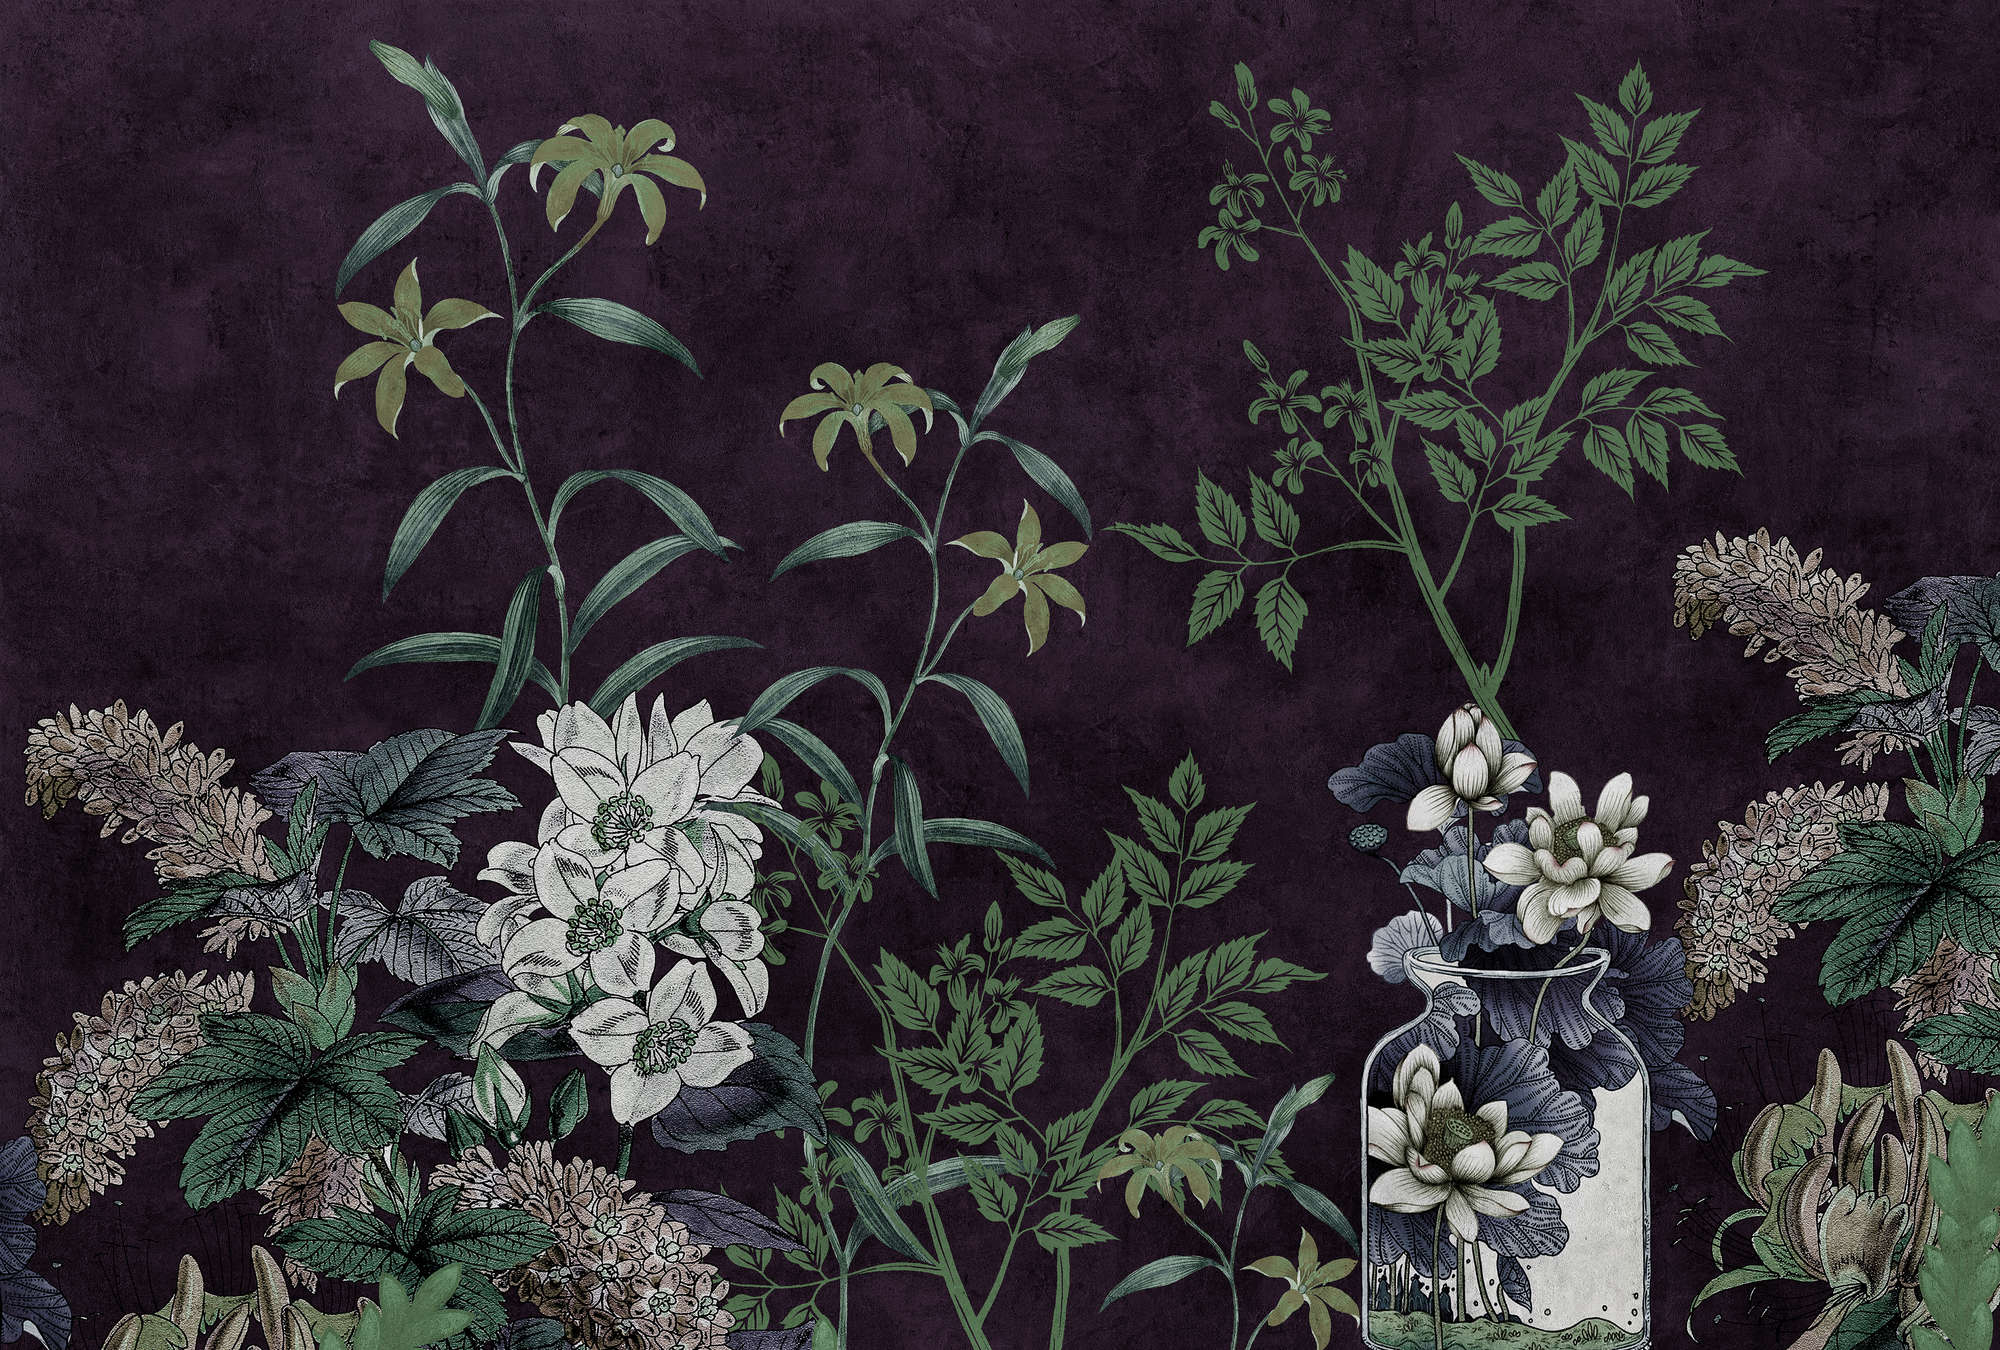             Dark Room 1 - Papier peint noir motif botanique vert
        